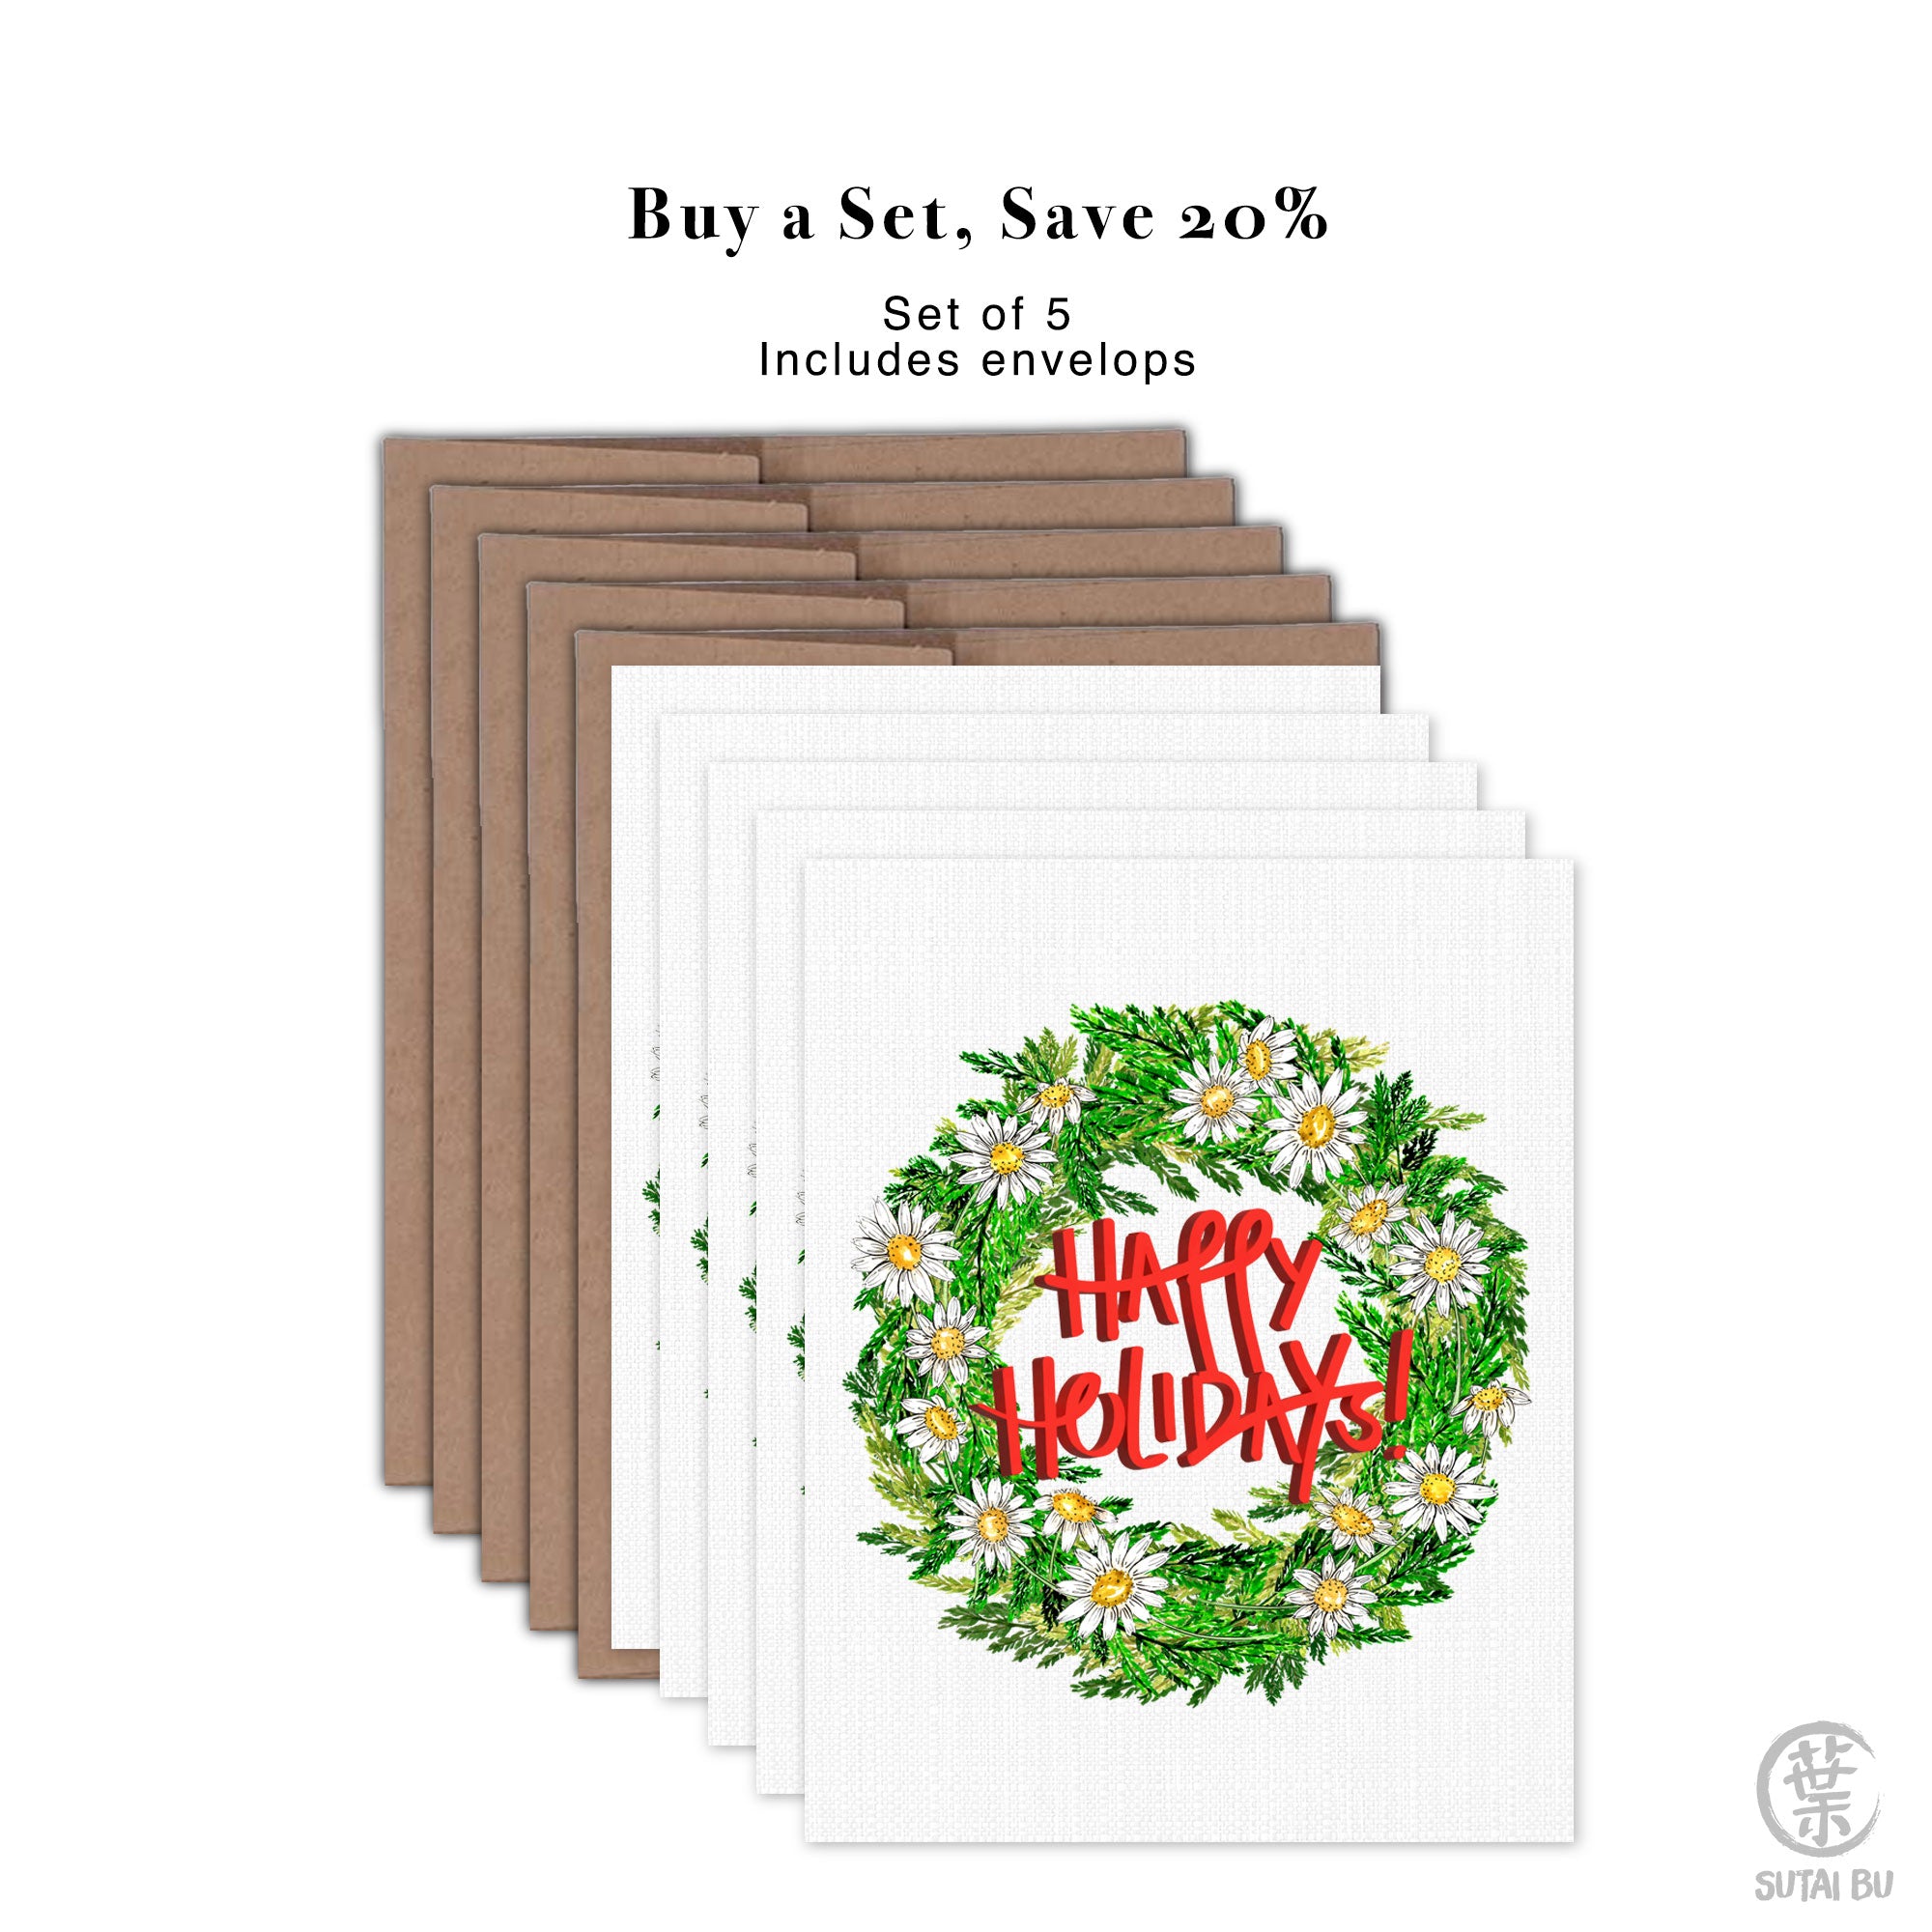 Greeting Card - Happy Holidays